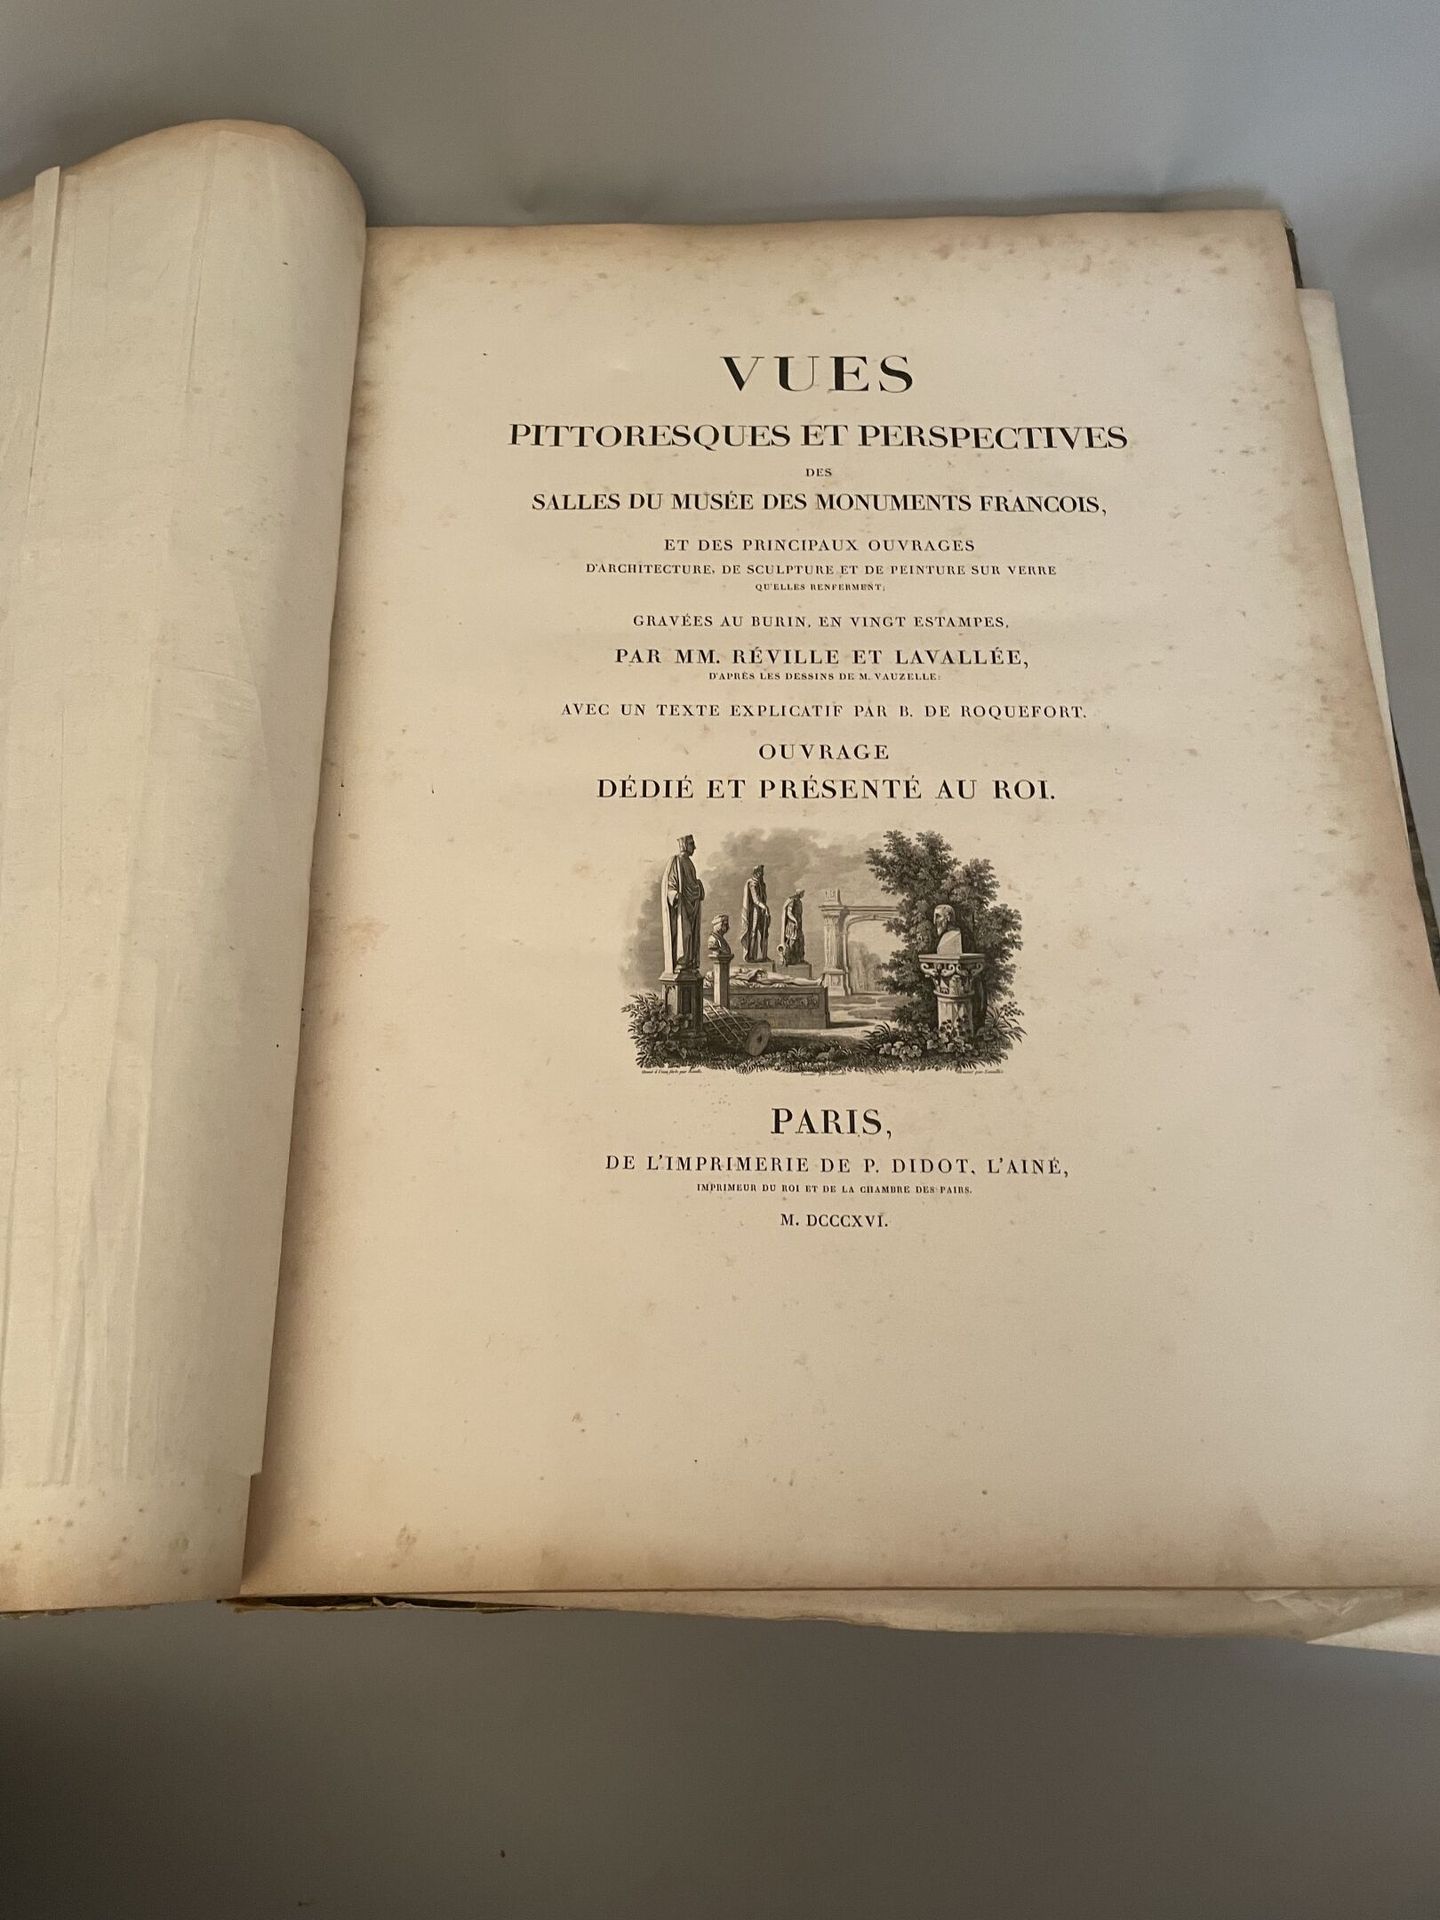 Null 法国古迹博物馆房间的美景和视角 - 在巴黎 - Didot l'Aimé - 1816年

REVILLE AND LAVALLEE的版画作品

Va&hellip;